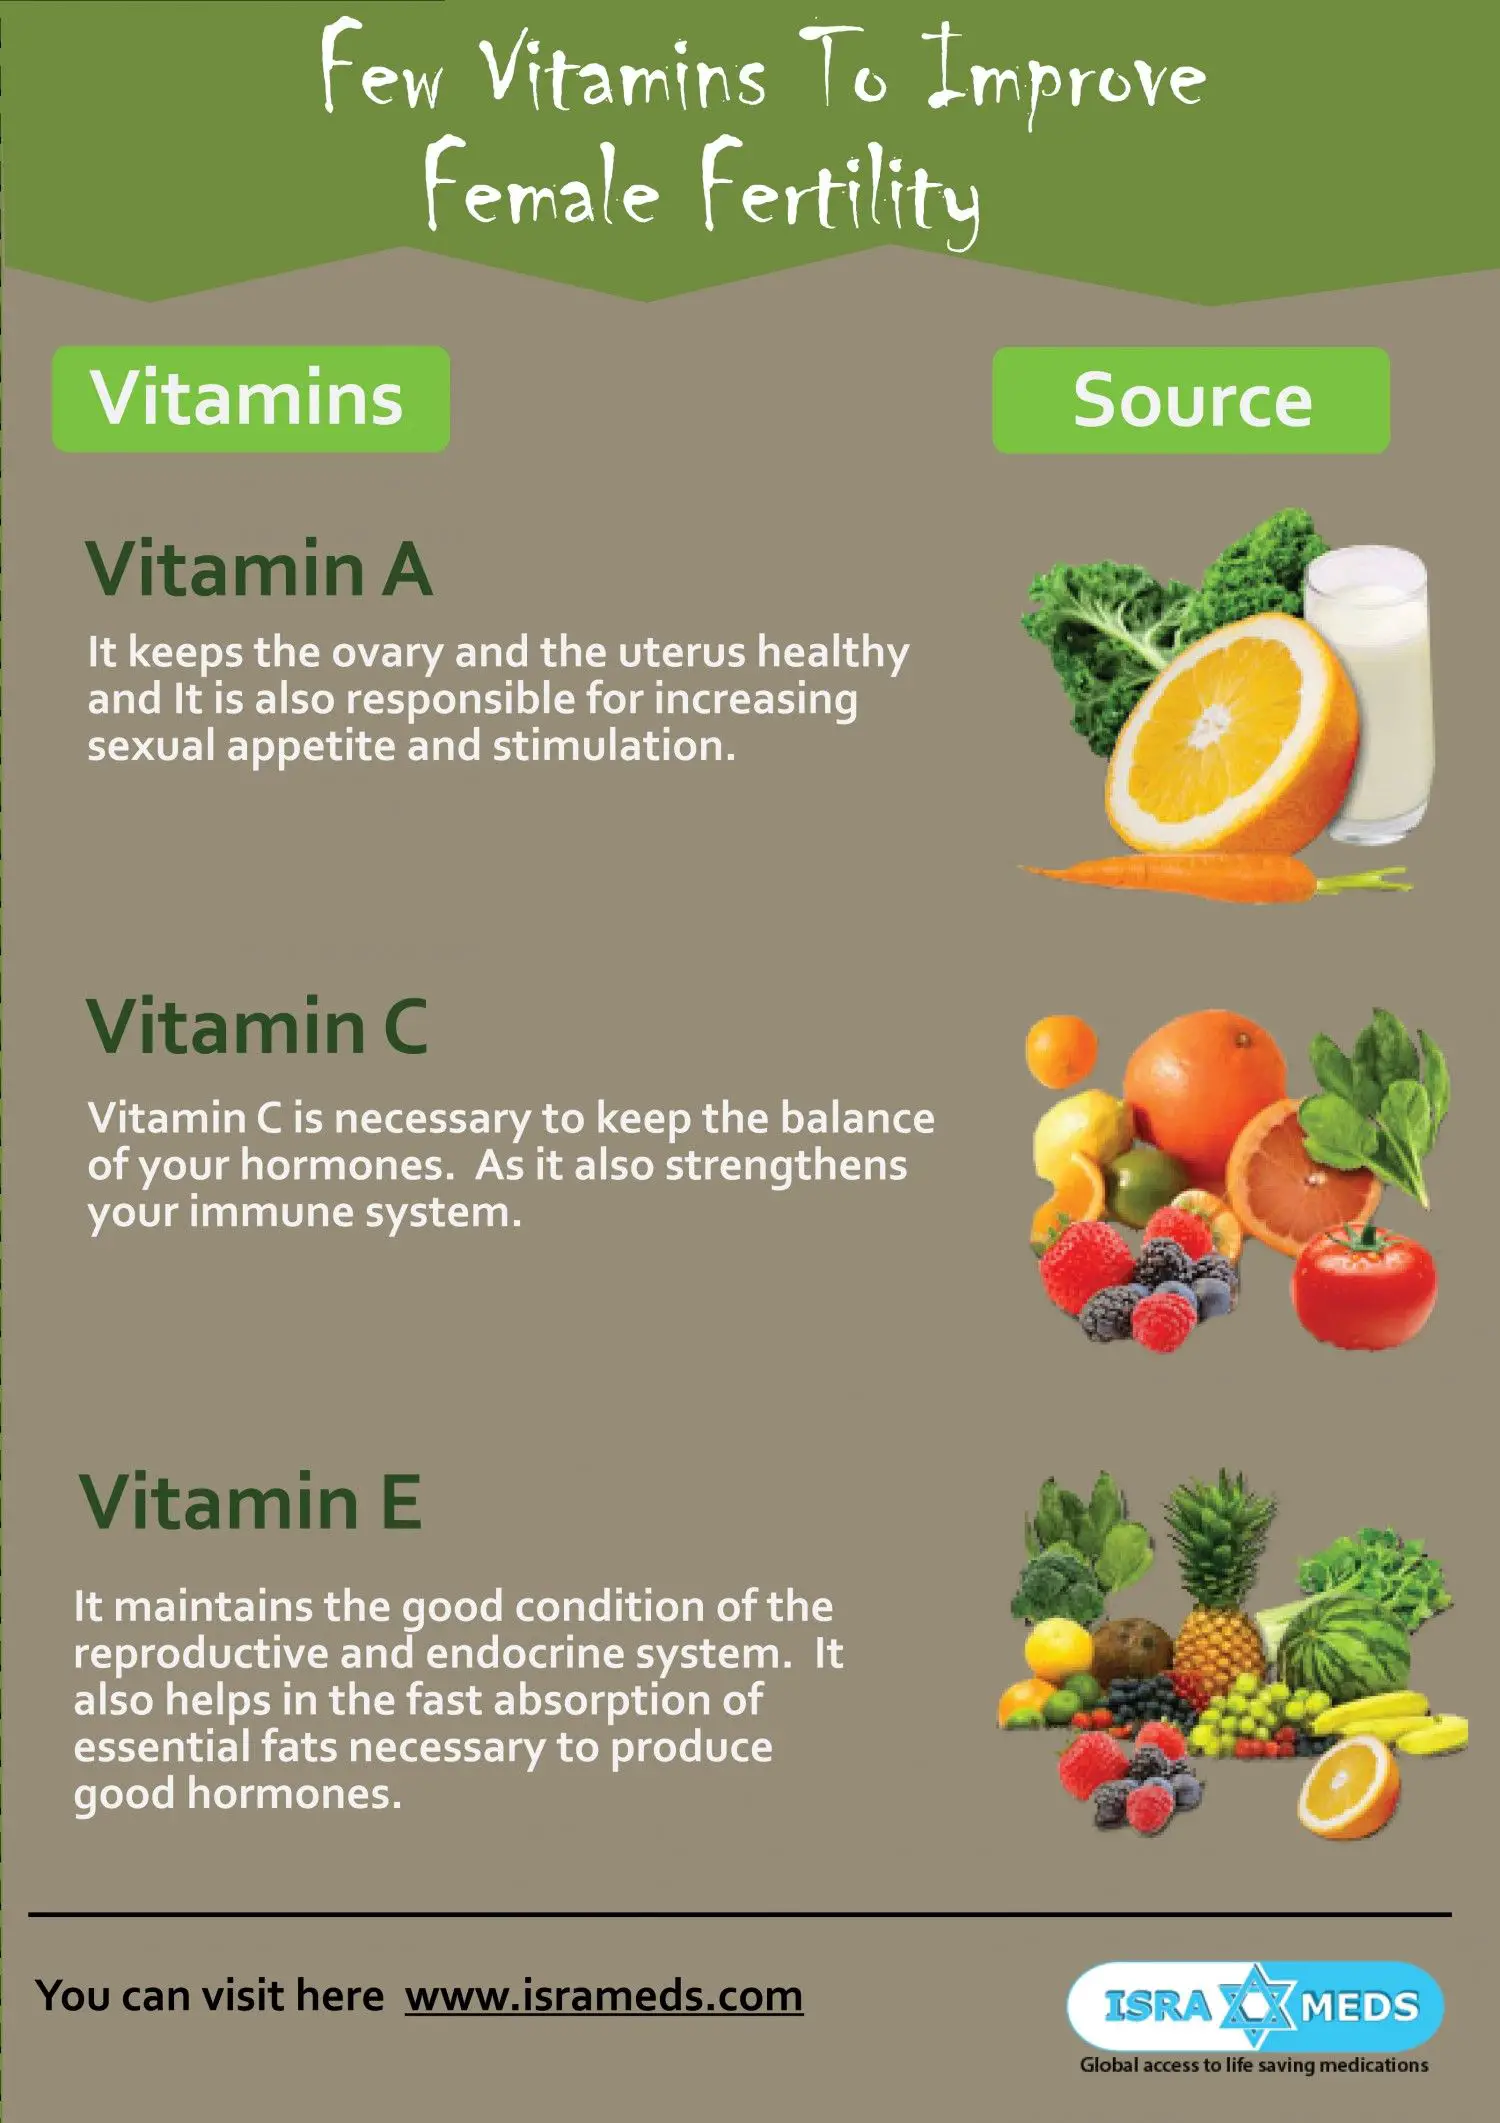 Few Vitamins to improve Female Fertility Infographic